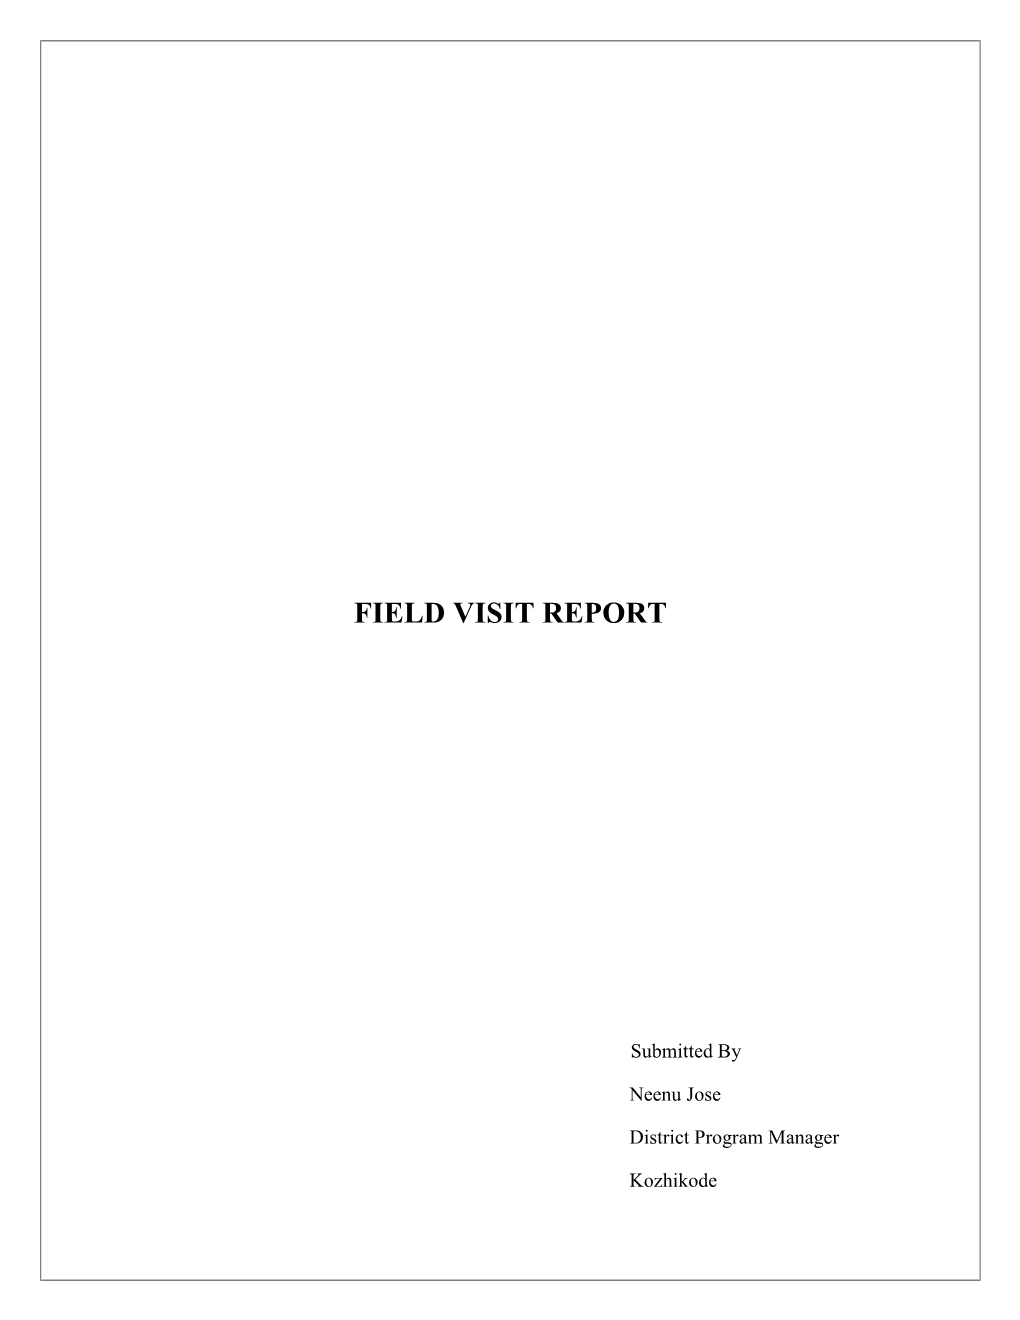 Field Visit Report